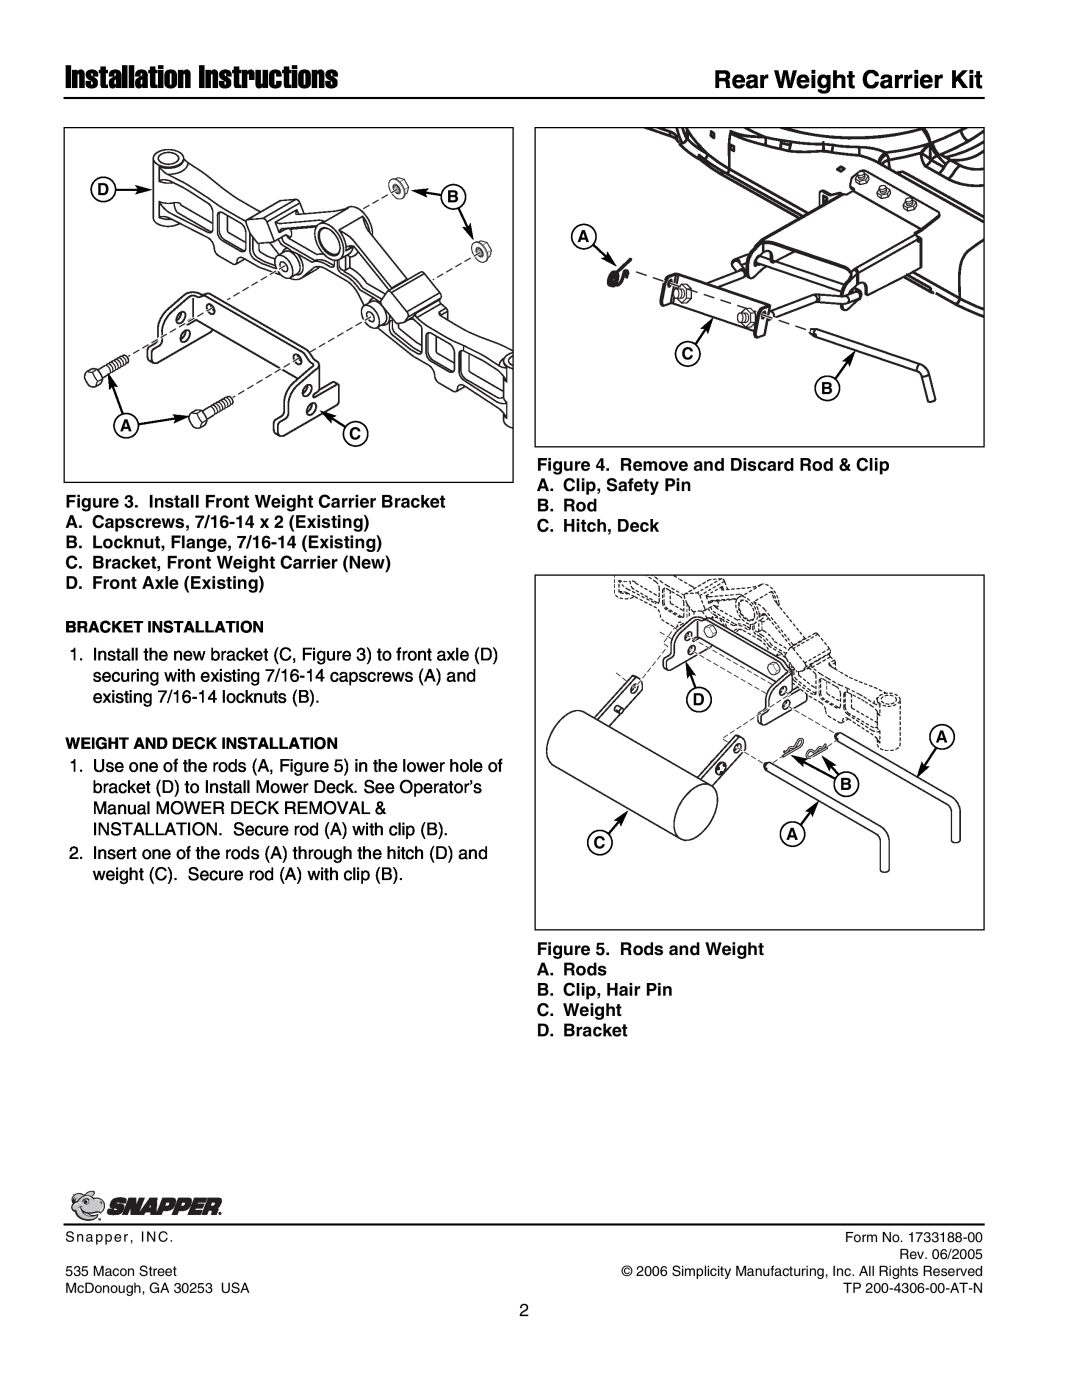 Snapper 1694946 installation instructions Installation Instructions, Rear Weight Carrier Kit 